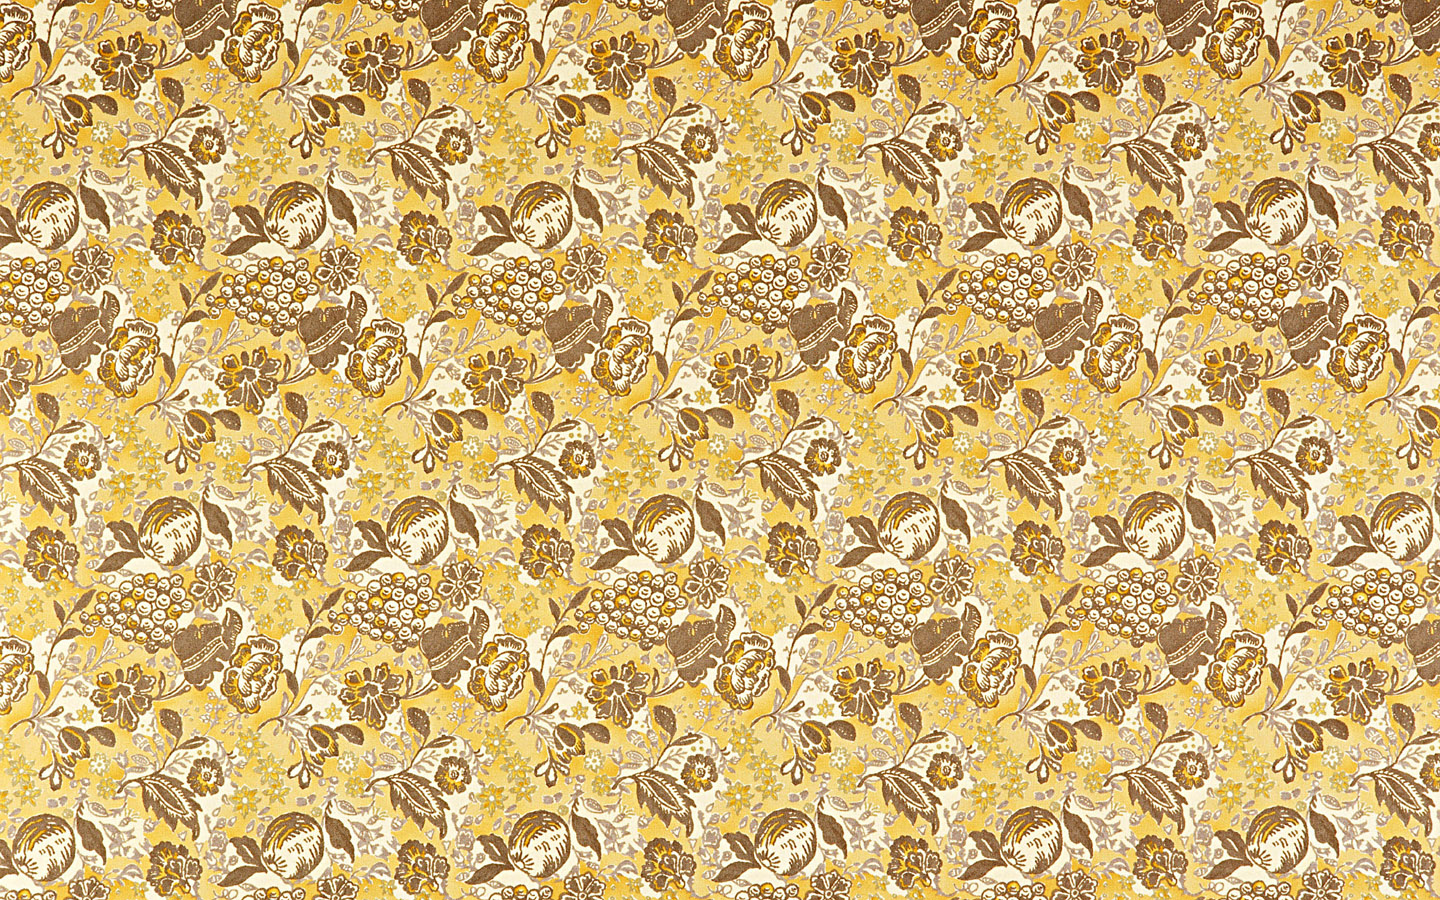 Gyrosigma background wallpaper pattern 19019 - Background patterns ...